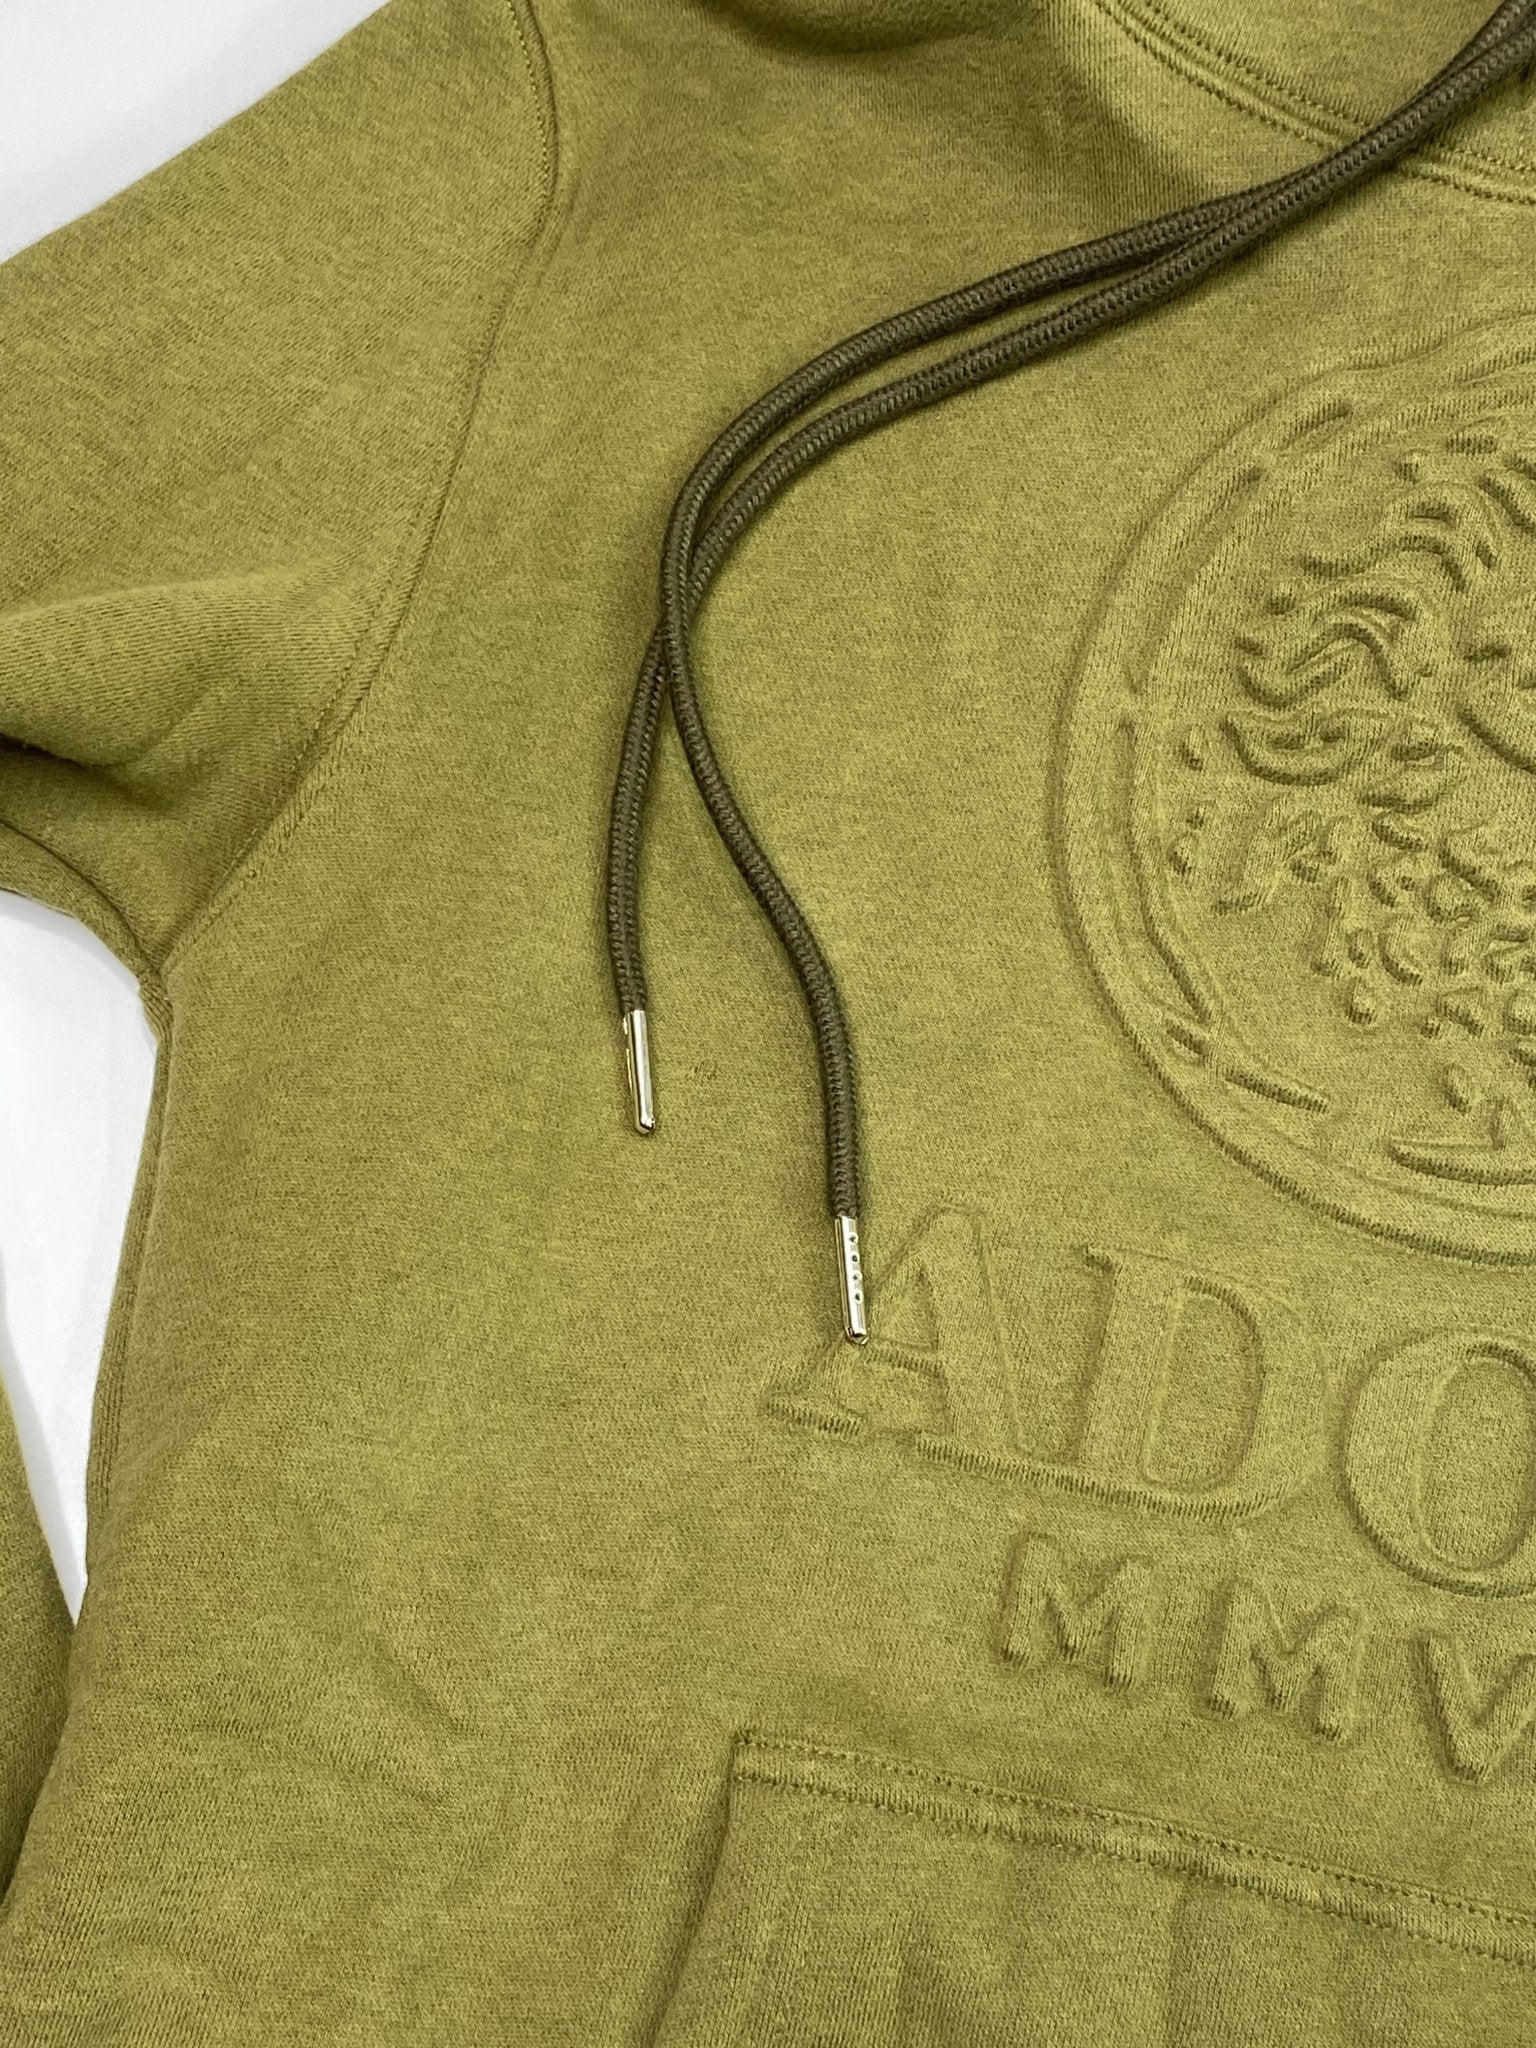 Premium Green Hooded Sweater ADONI MMVII New York – ADONI MMVII NEW YORK